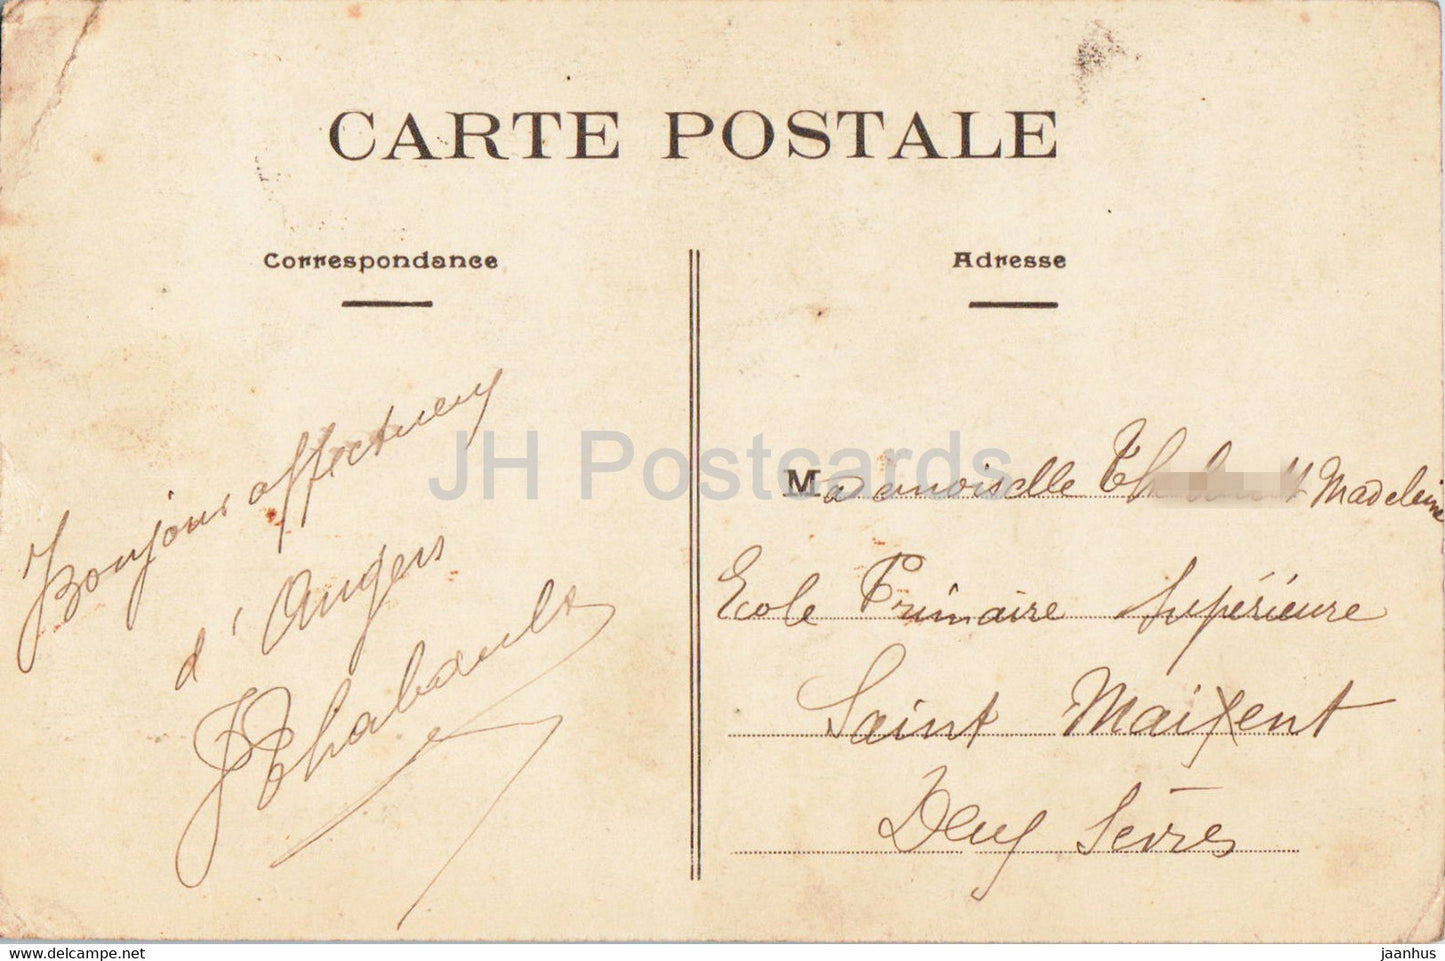 Angers - Musée - Galerie David - musée - 44 - carte postale ancienne - 1909 - France - occasion